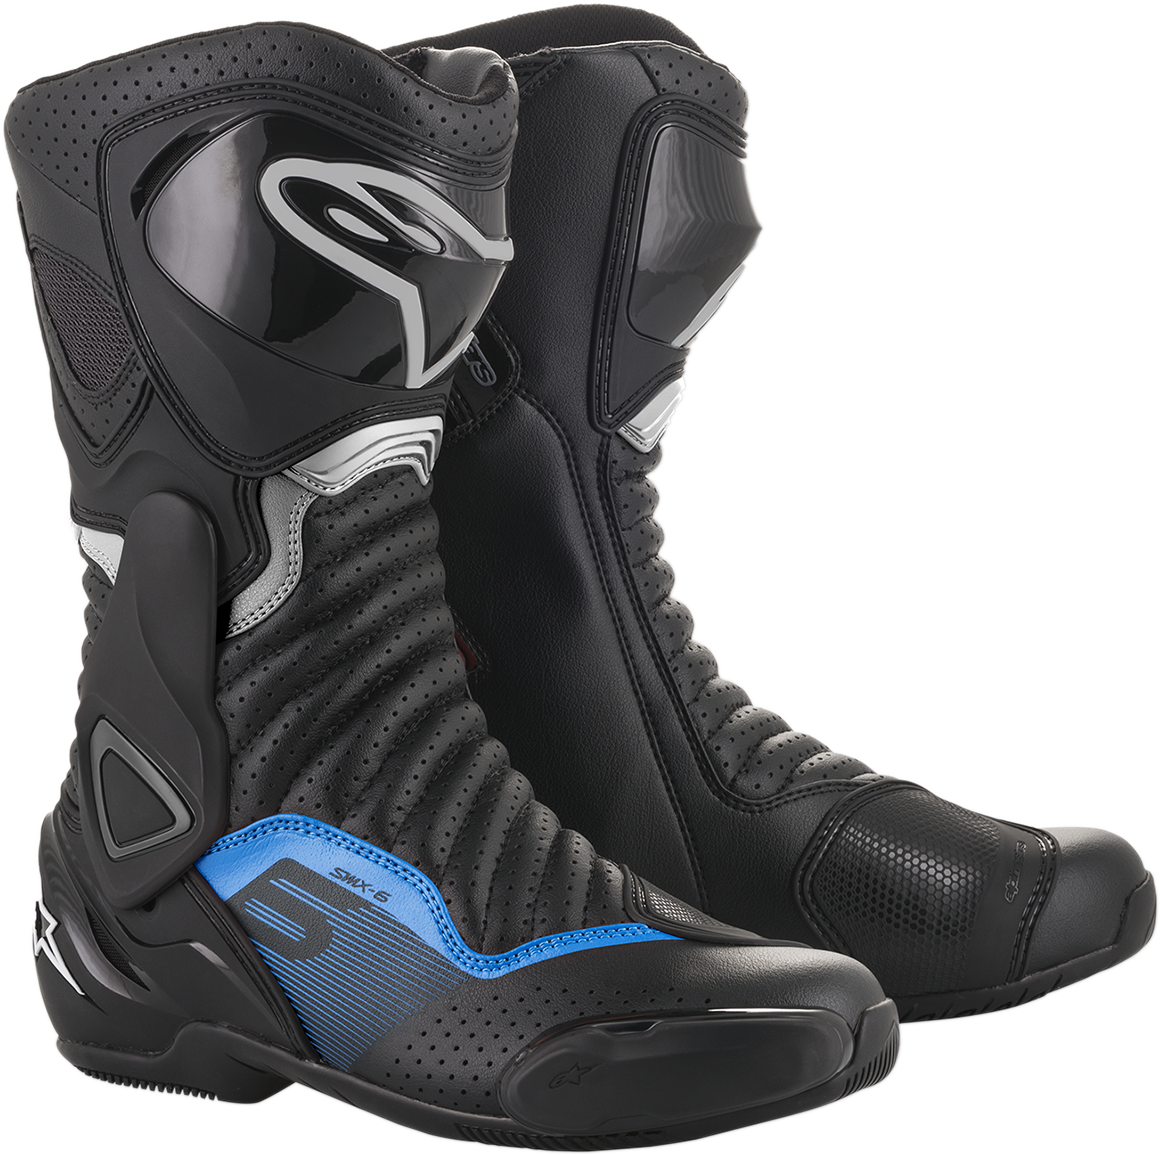 ALPINESTARS SMX-6 v2 Vented Boots - Black/Gray/Blue - US 7.5 / EU 41 2223017-1178-41